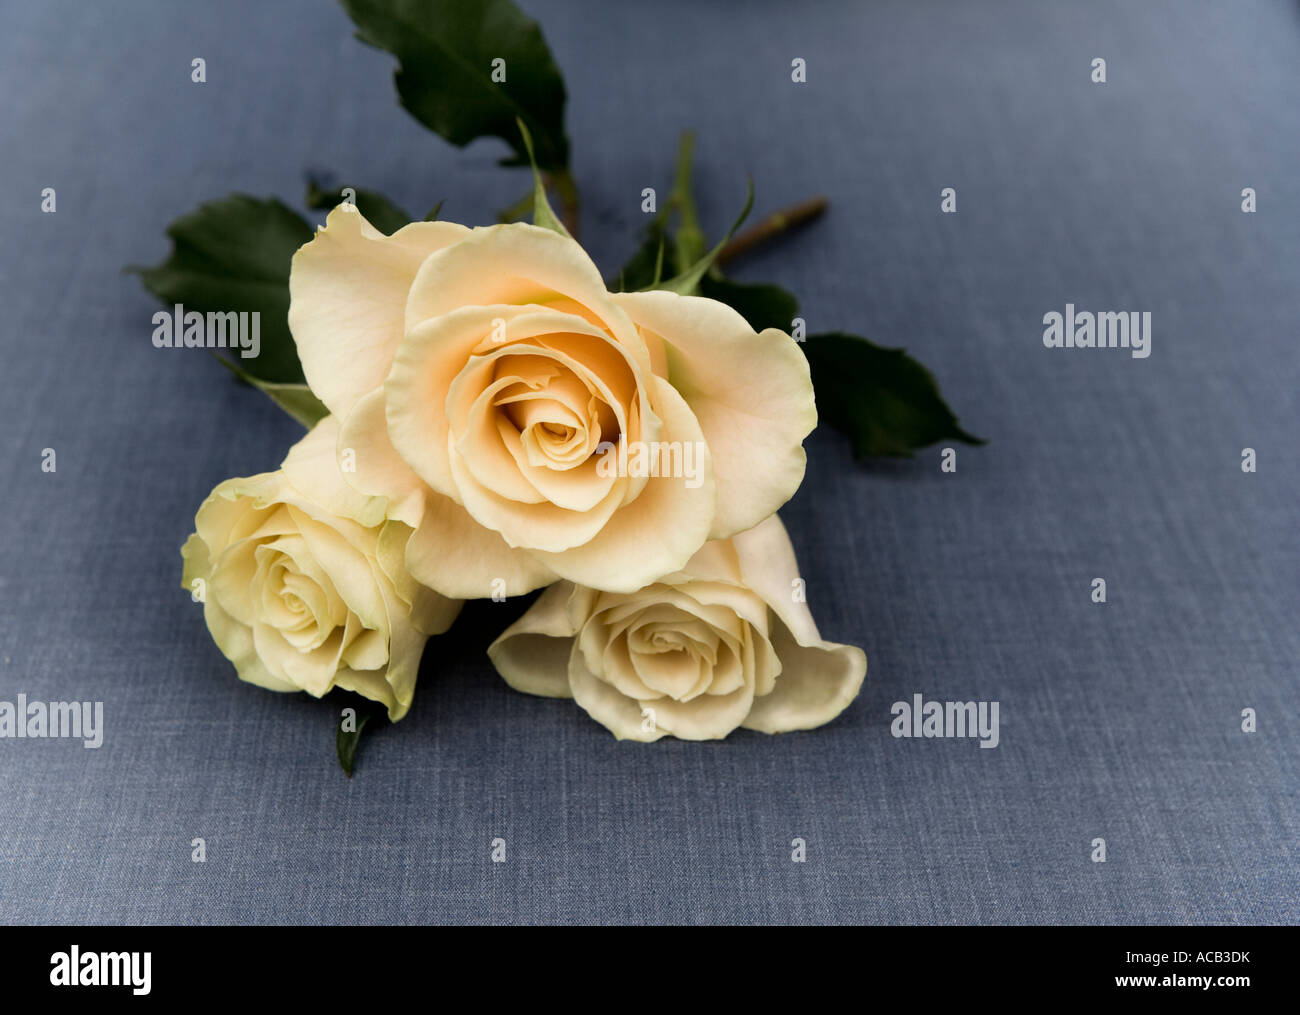 Retro style roses on blue cotton background Stock Photo